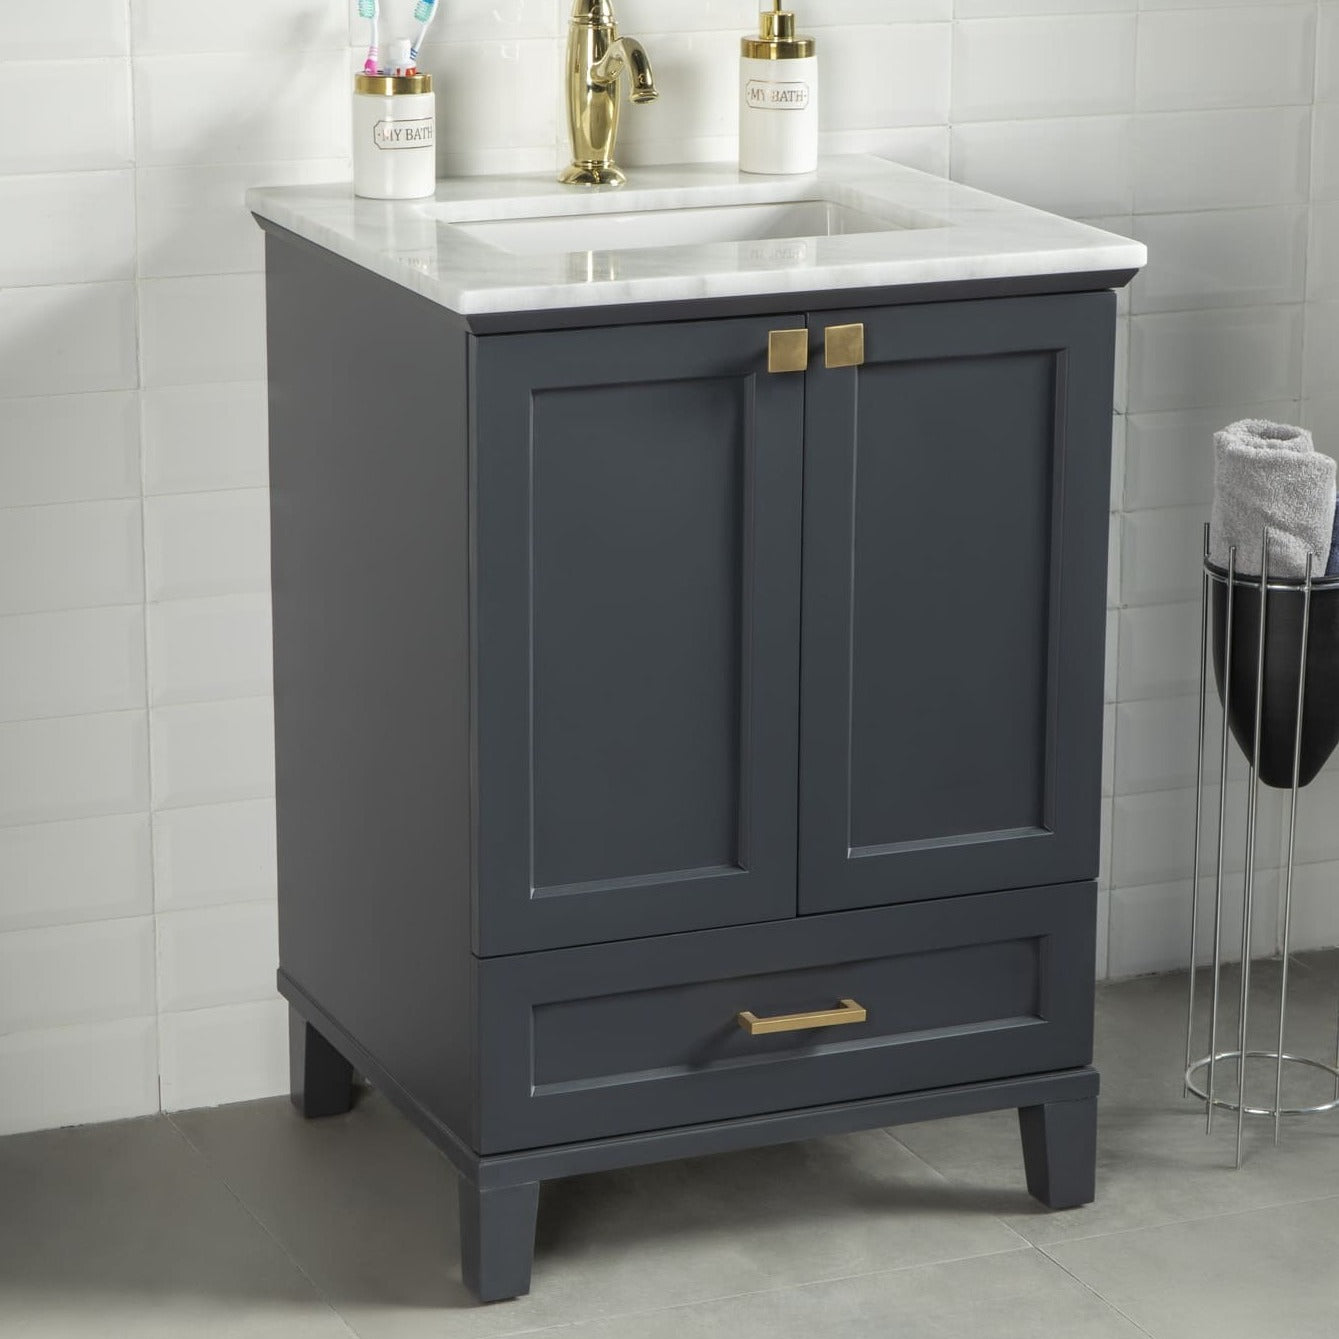 Paloma Bathroom Cabinets  Homelero 24"  #size_24"  #color_dark grey  #hardware_brass